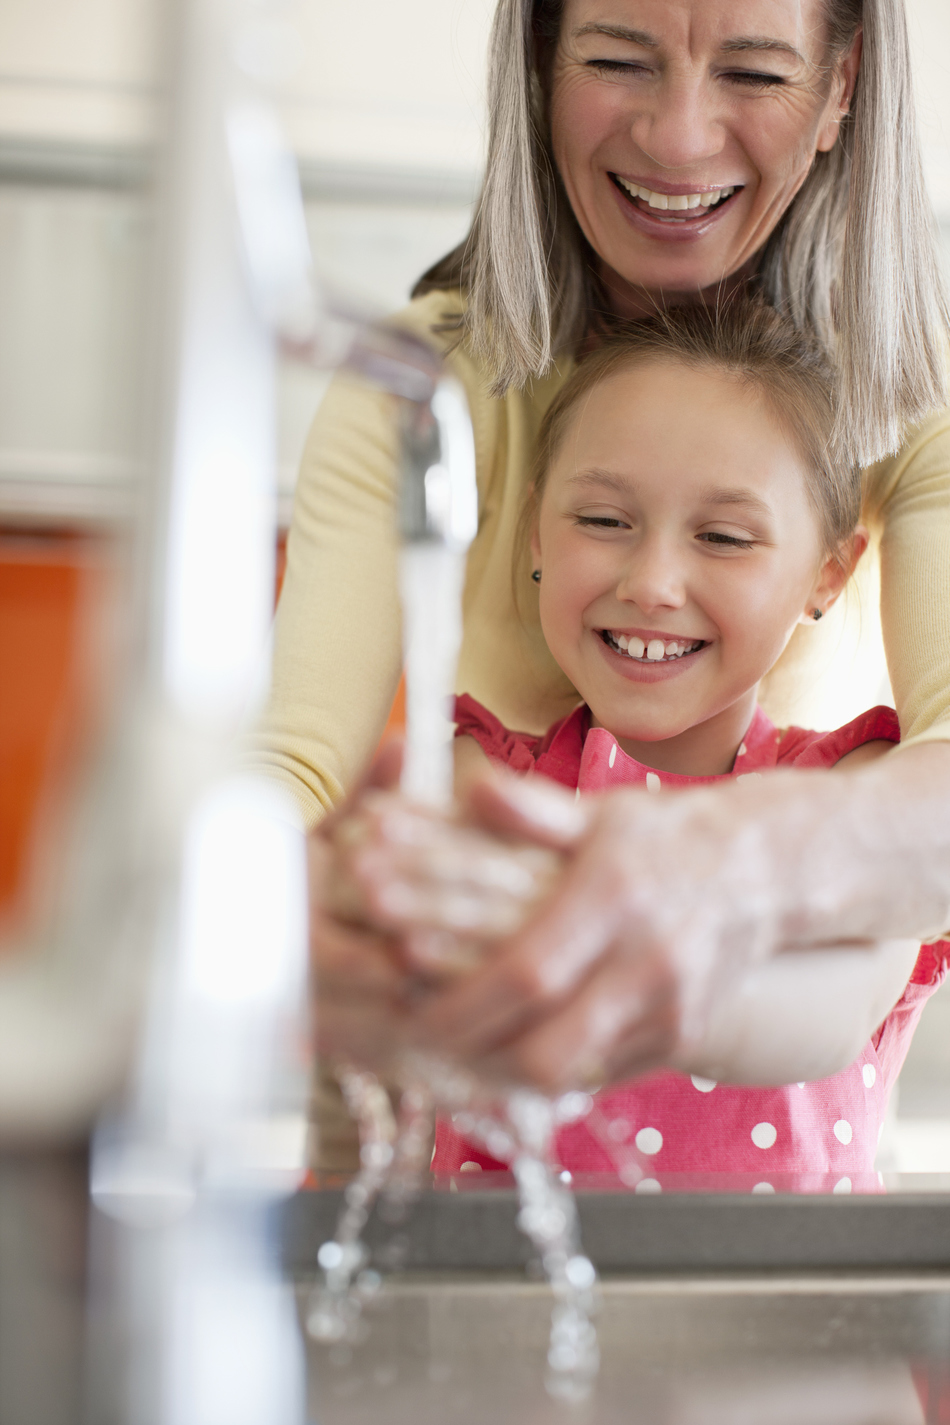 How to Make Handwashing Fun for Children